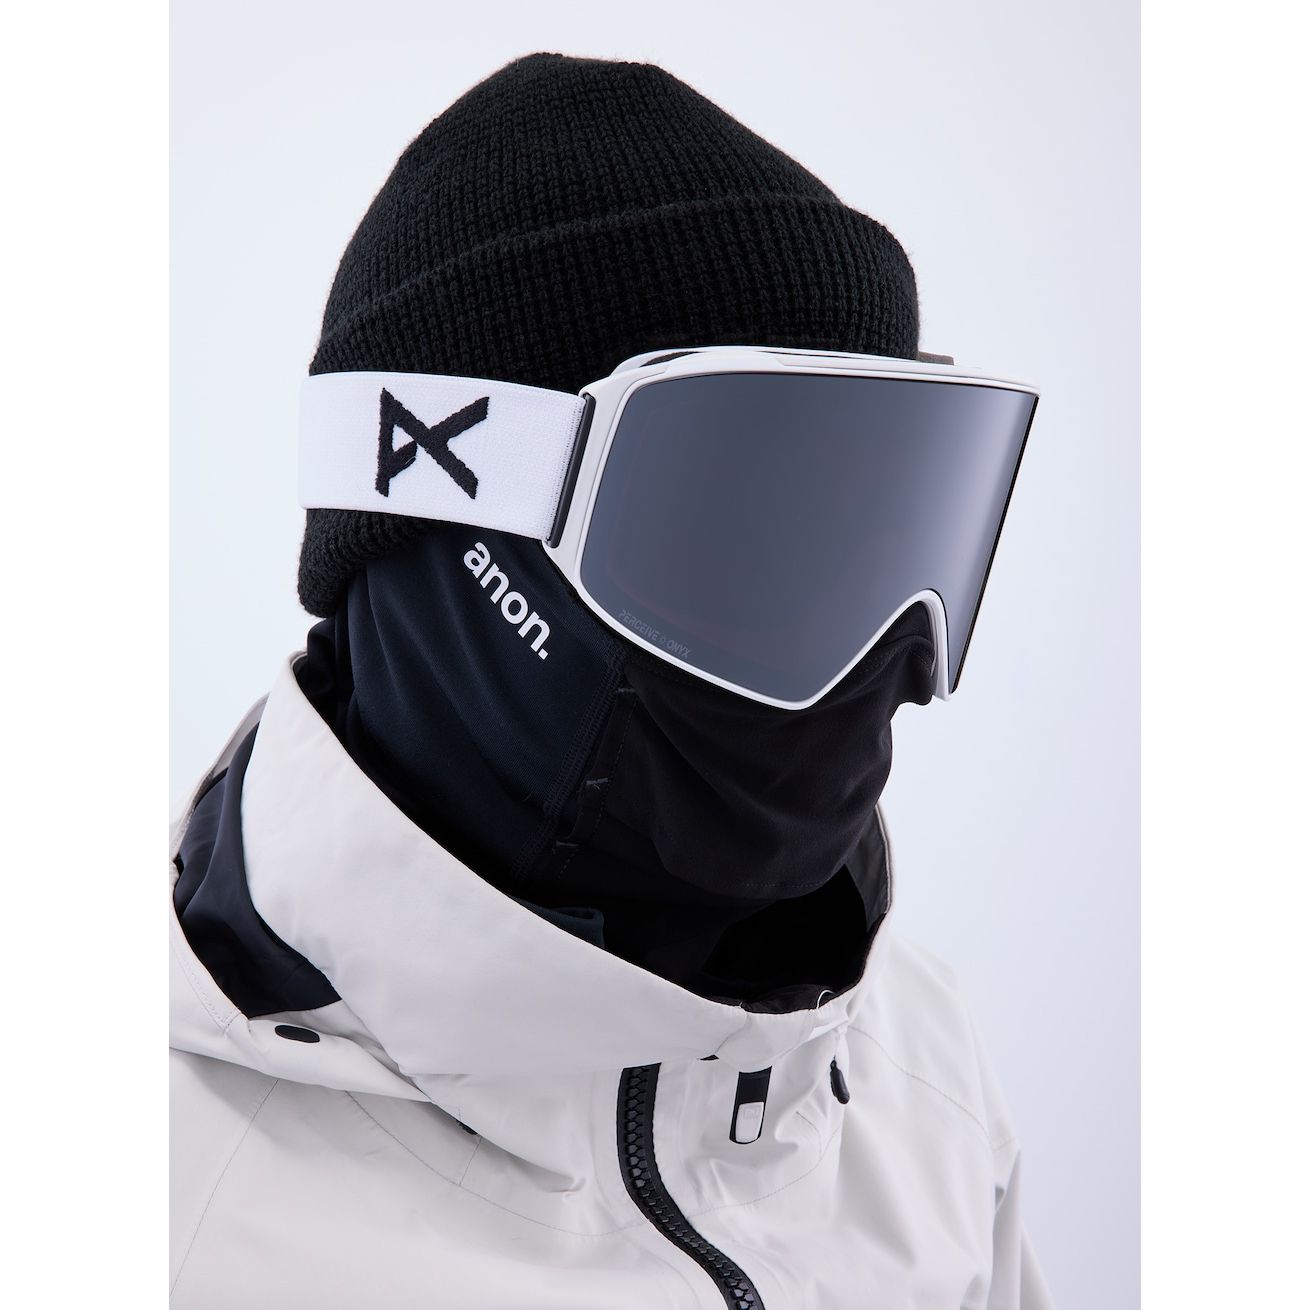 Anon M4 Cylindrical Goggles + Bonus Lens + MFI Face Mask White / Perceive Sunny Onyx Snow Goggles